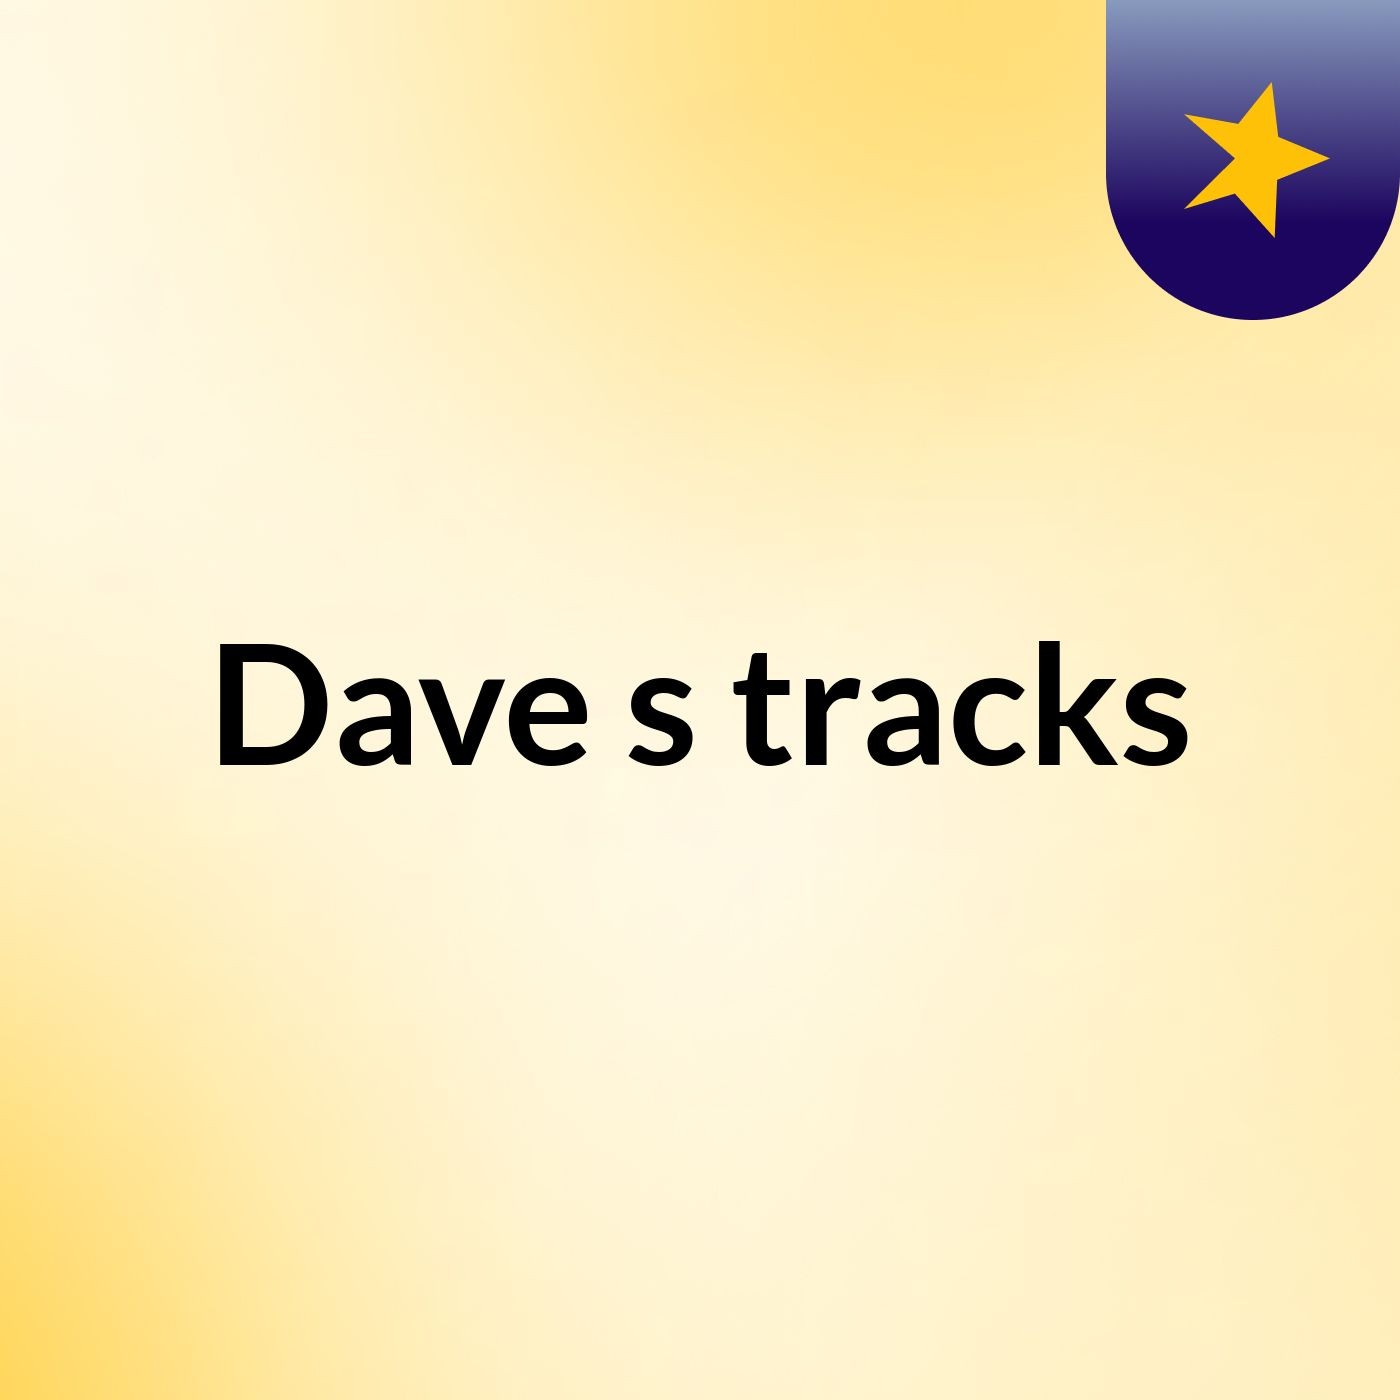 Dave's tracks